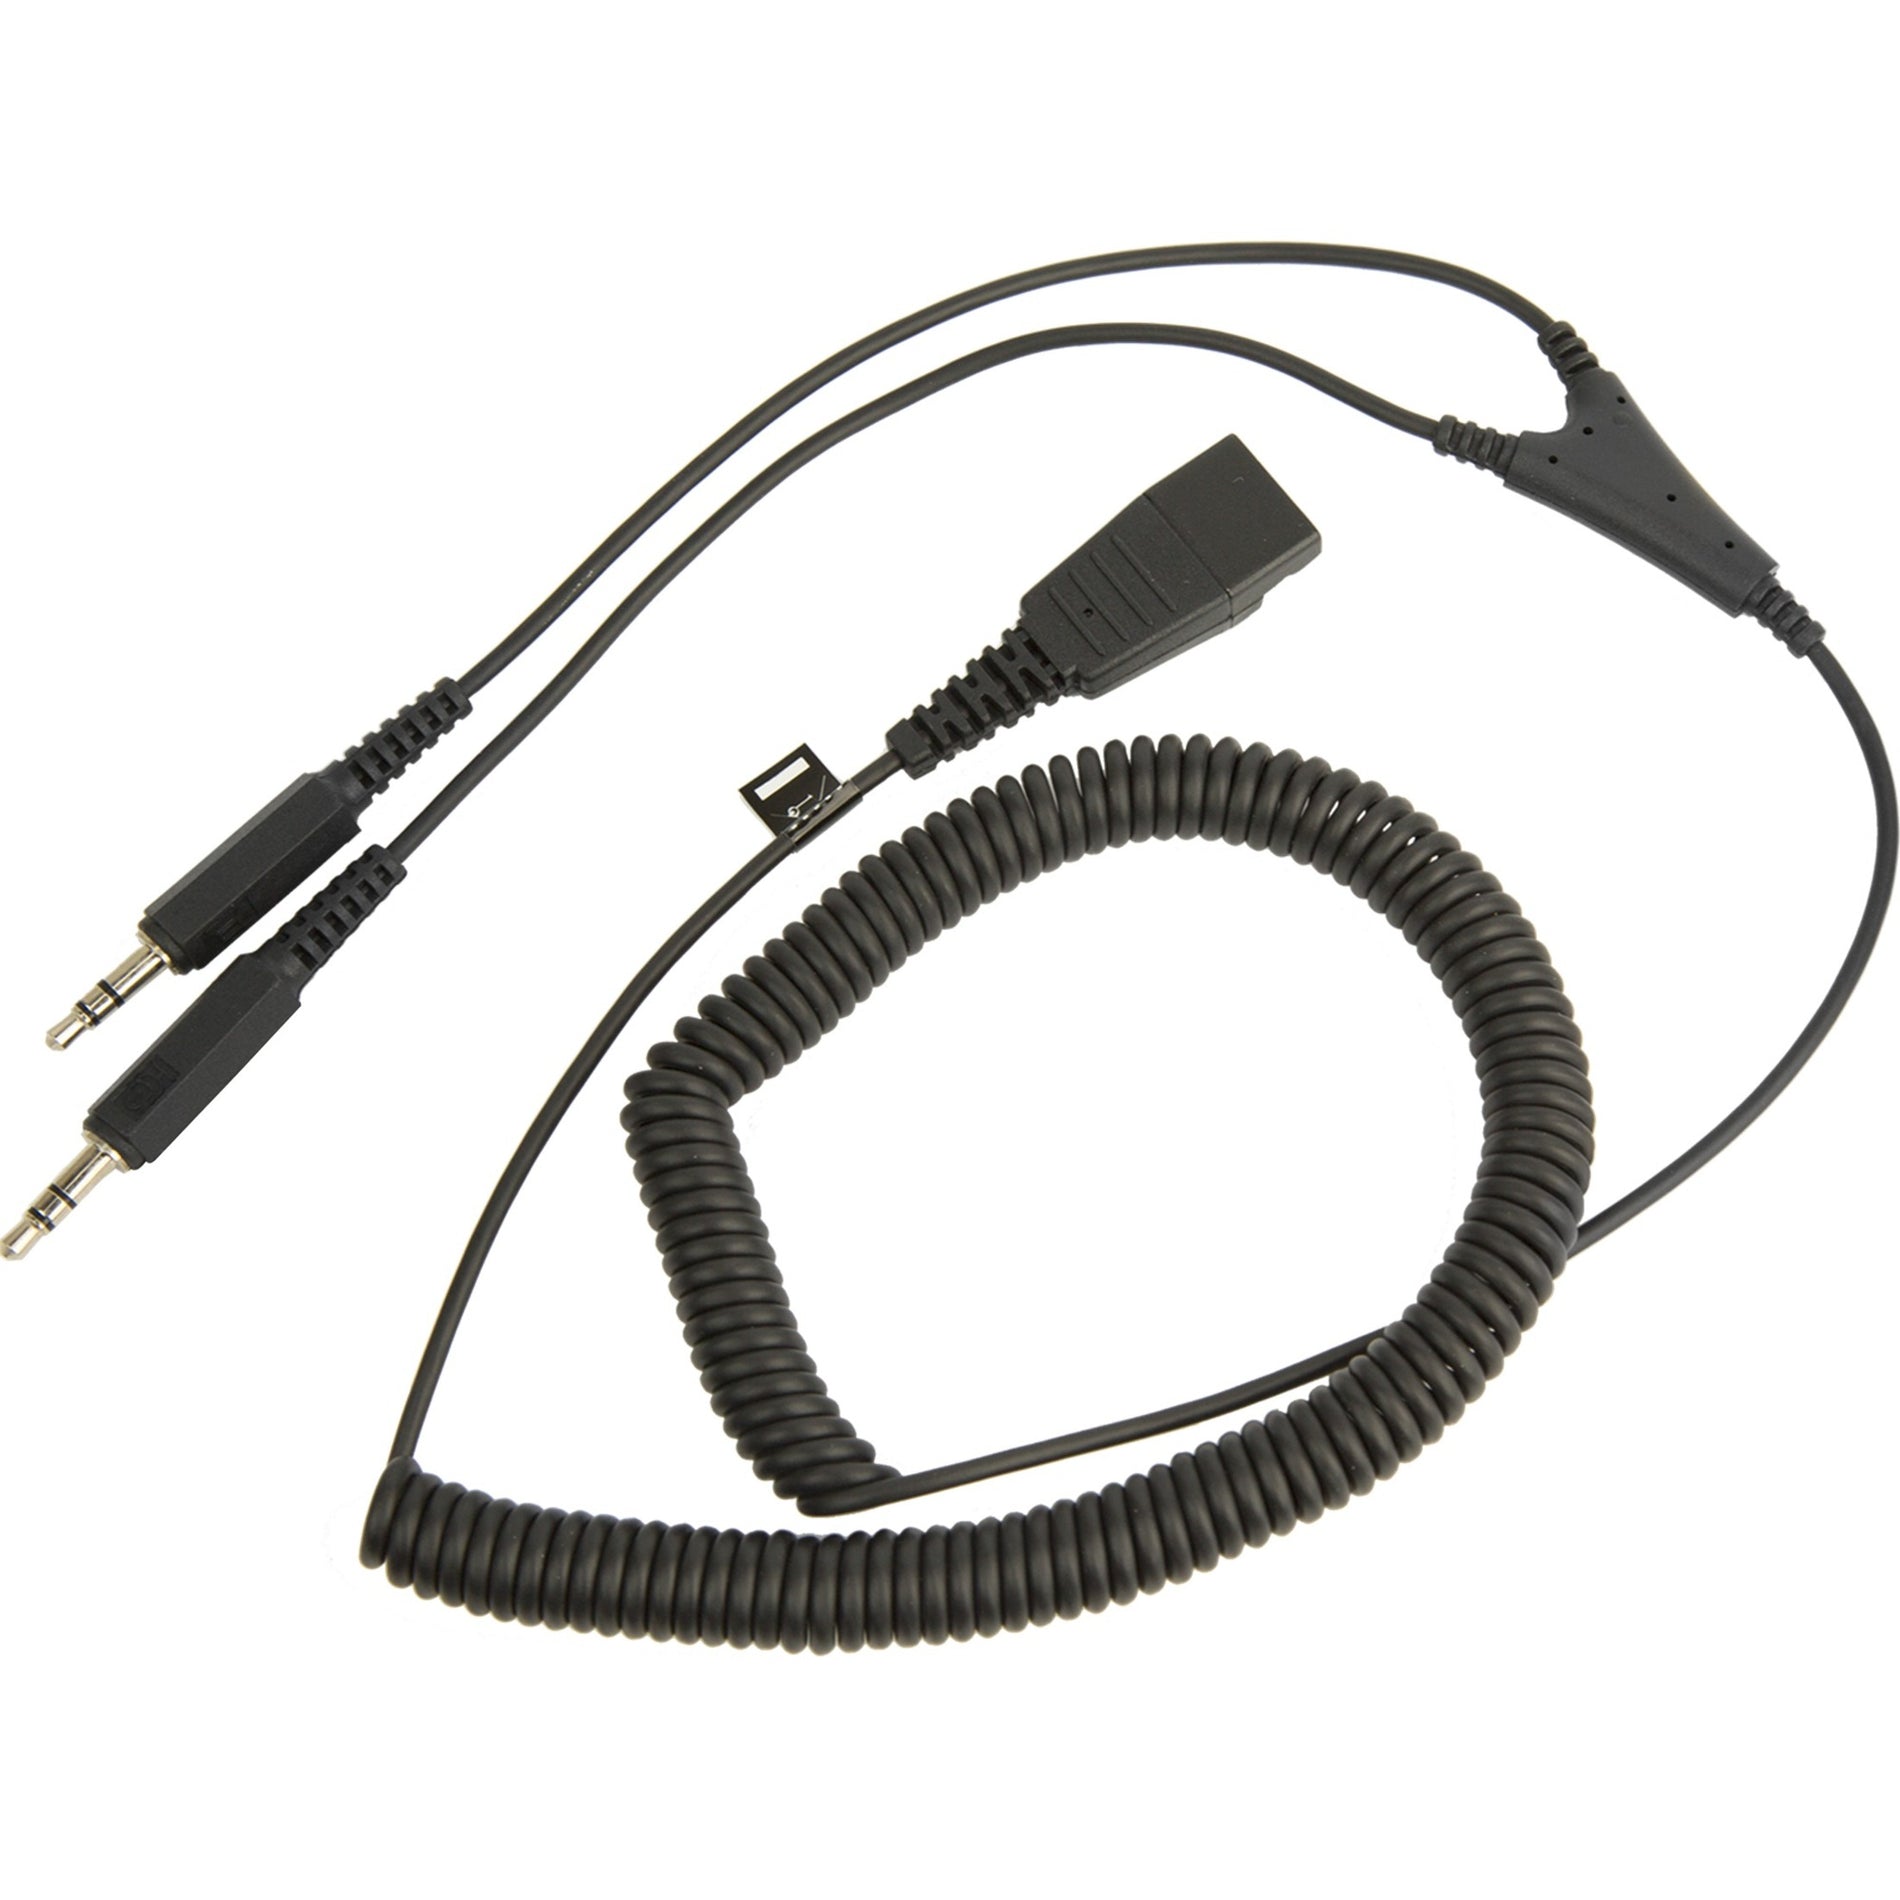 Jabra 8734-599 Audio Cable, Quick Disconnect to Mini-phone Audio - Female, Copper Conductor, Black